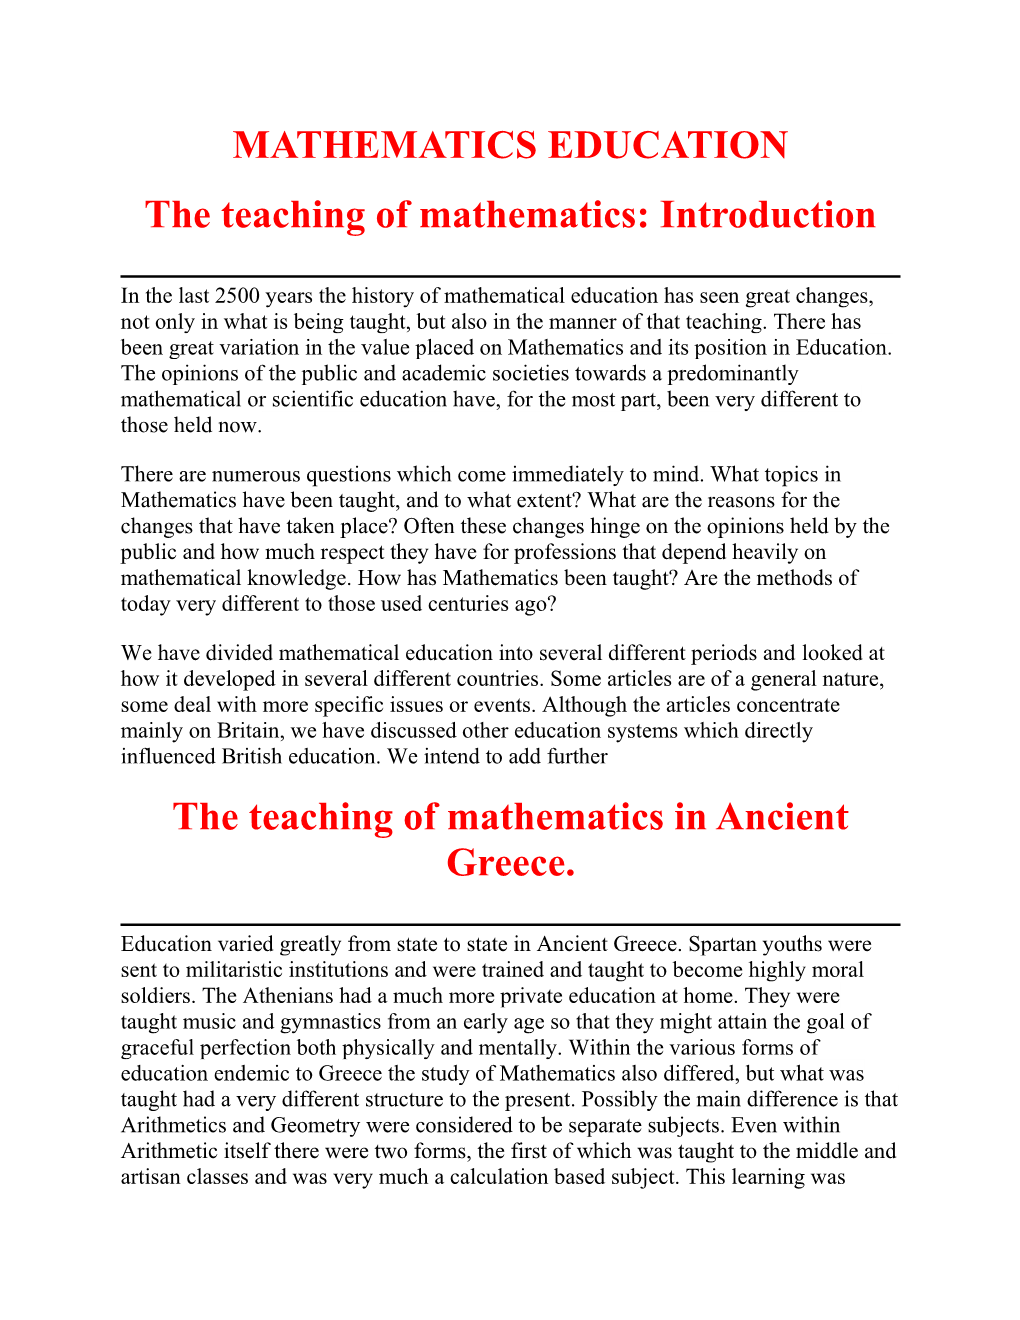 MATHEMATICS EDUCATION the Teaching of Mathematics: Introduction